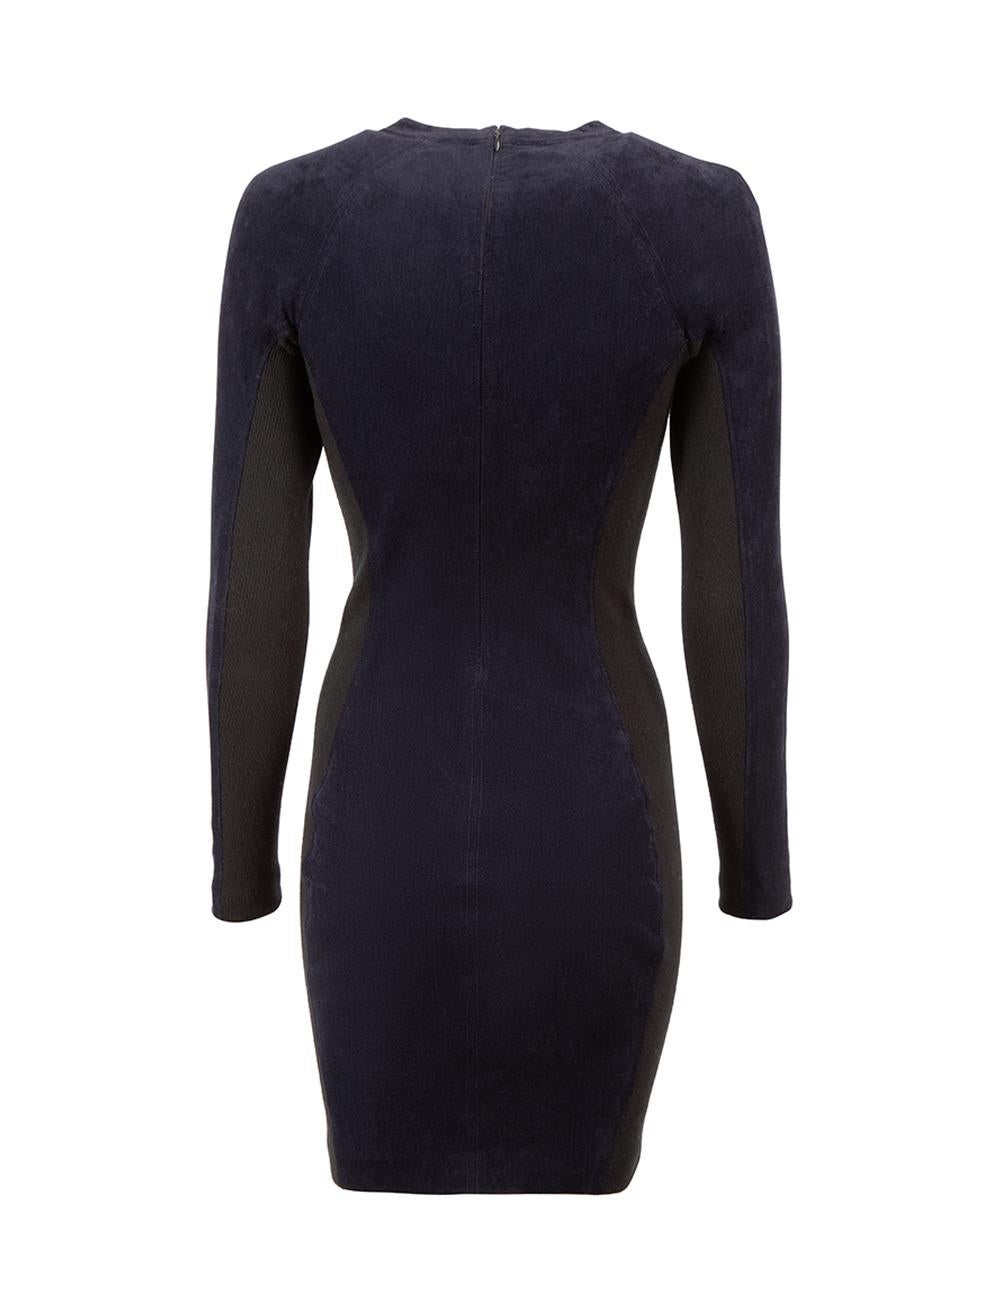 Black Navy Cotton Mini Dress Size XS For Sale